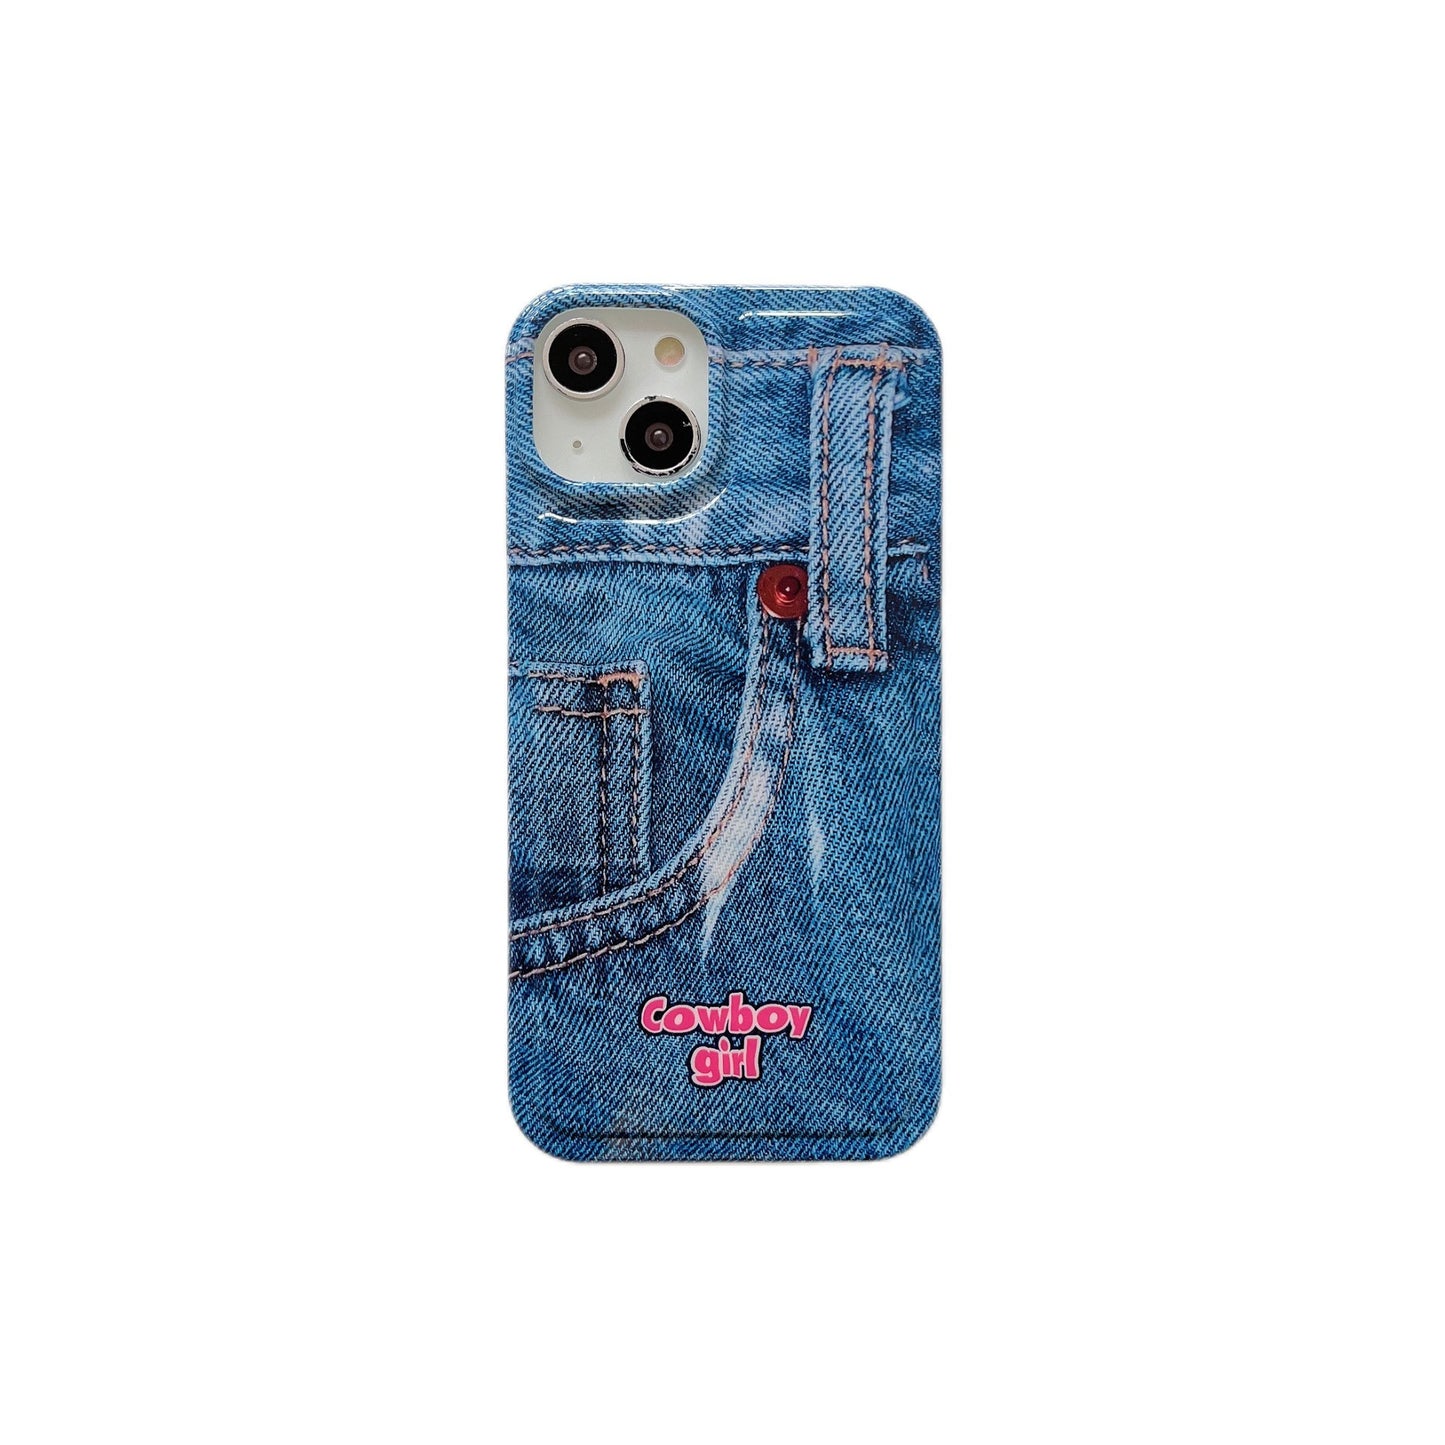 Cowboy girl IMD print jeans pattern phone case